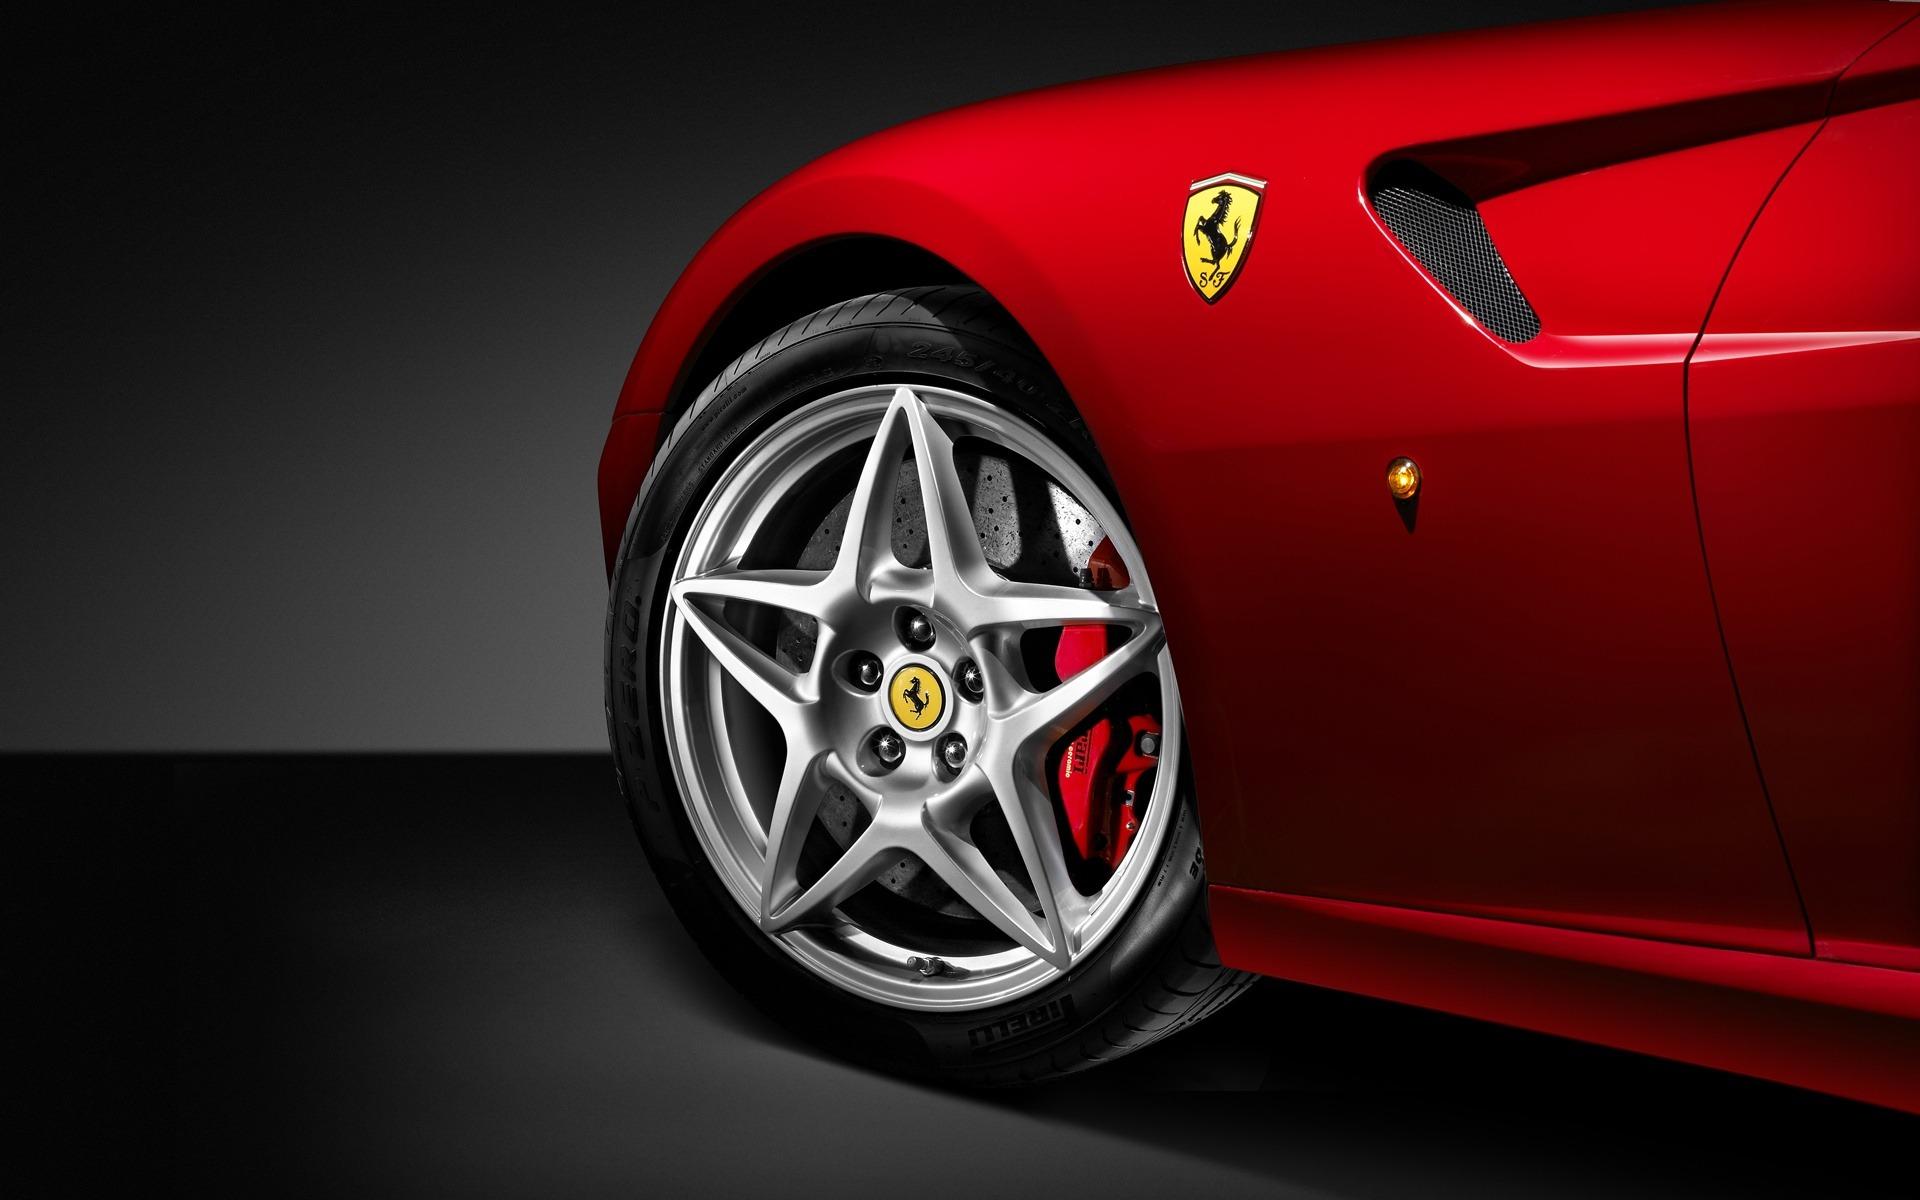 Ferrari Fiorano rims Wallpaper Ferrari Cars Wallpaper in jpg